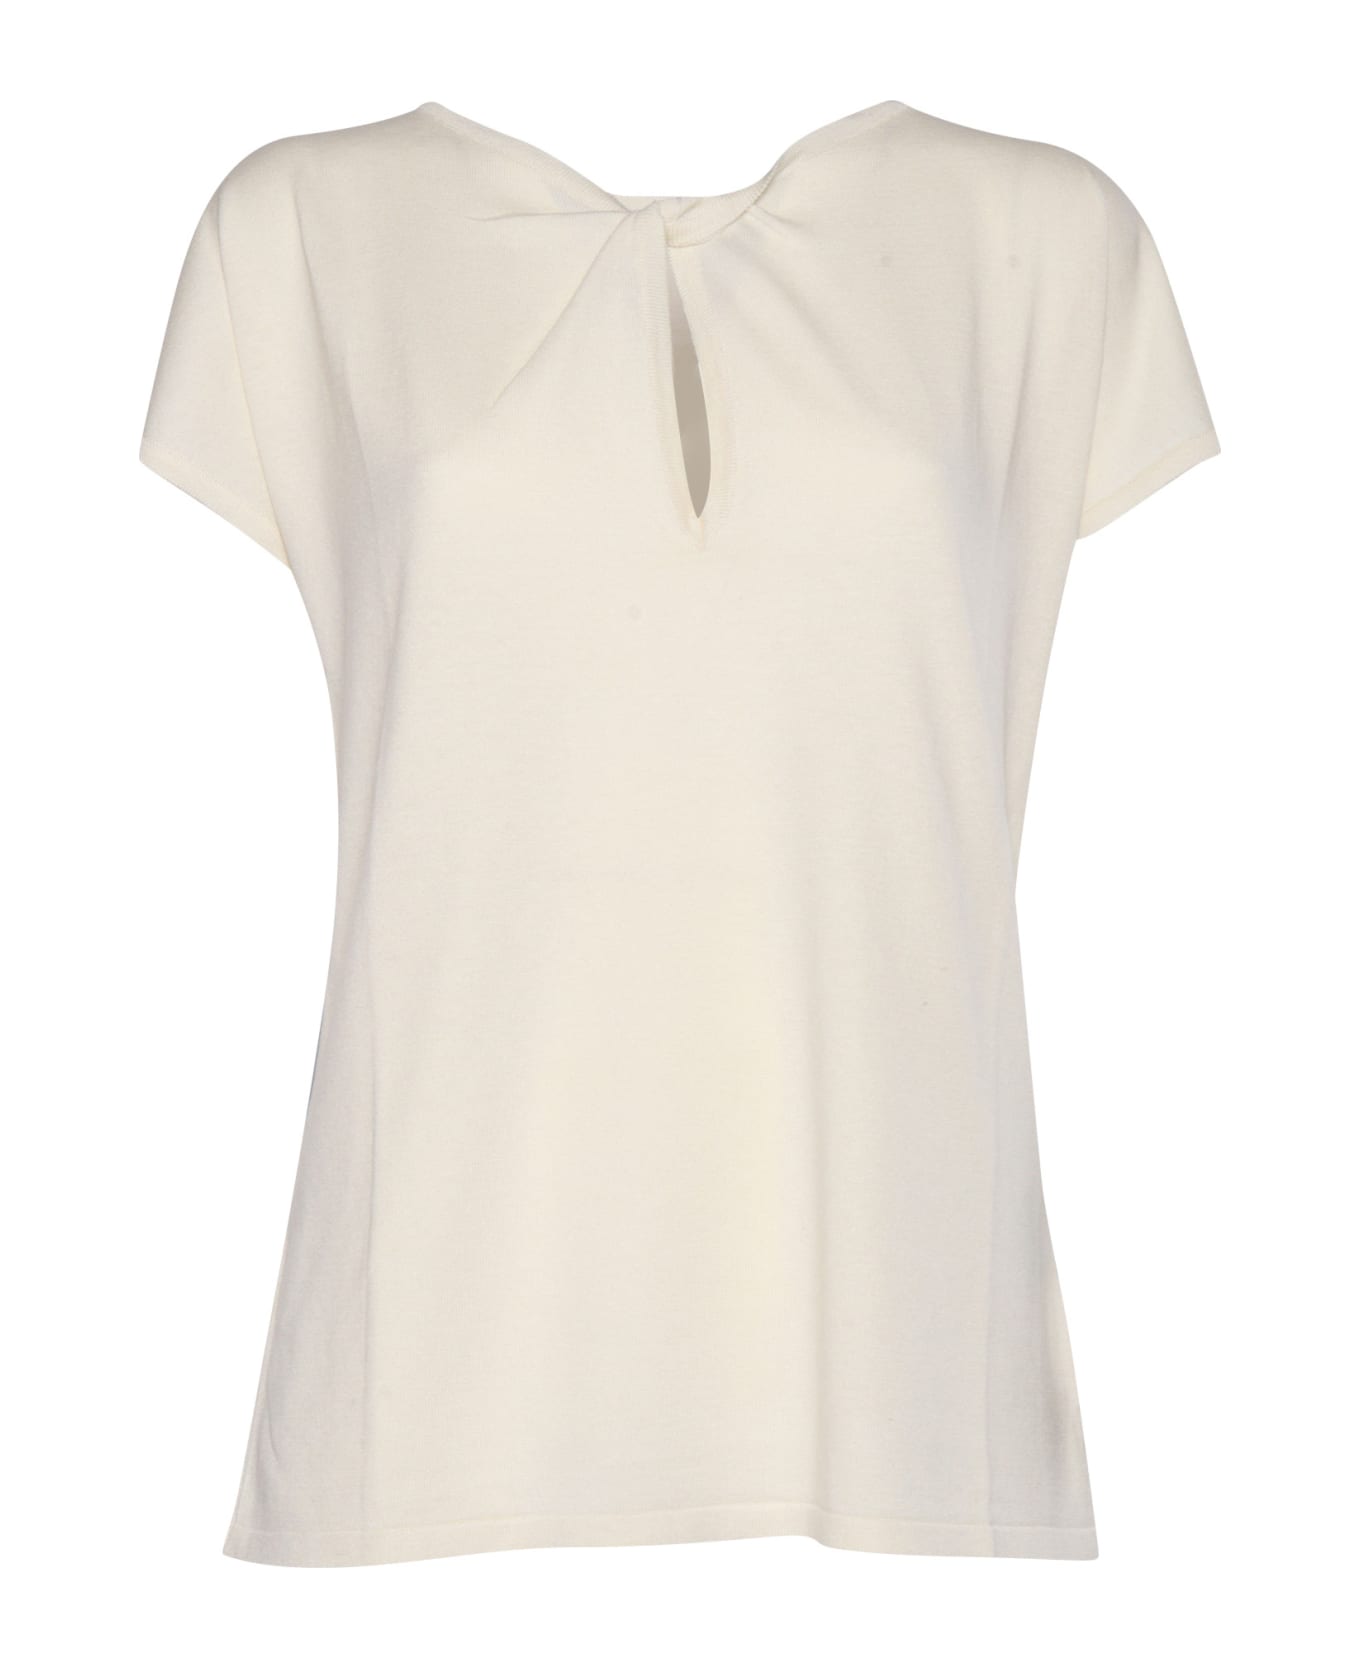 Ballantyne White T-shirt - WHITE